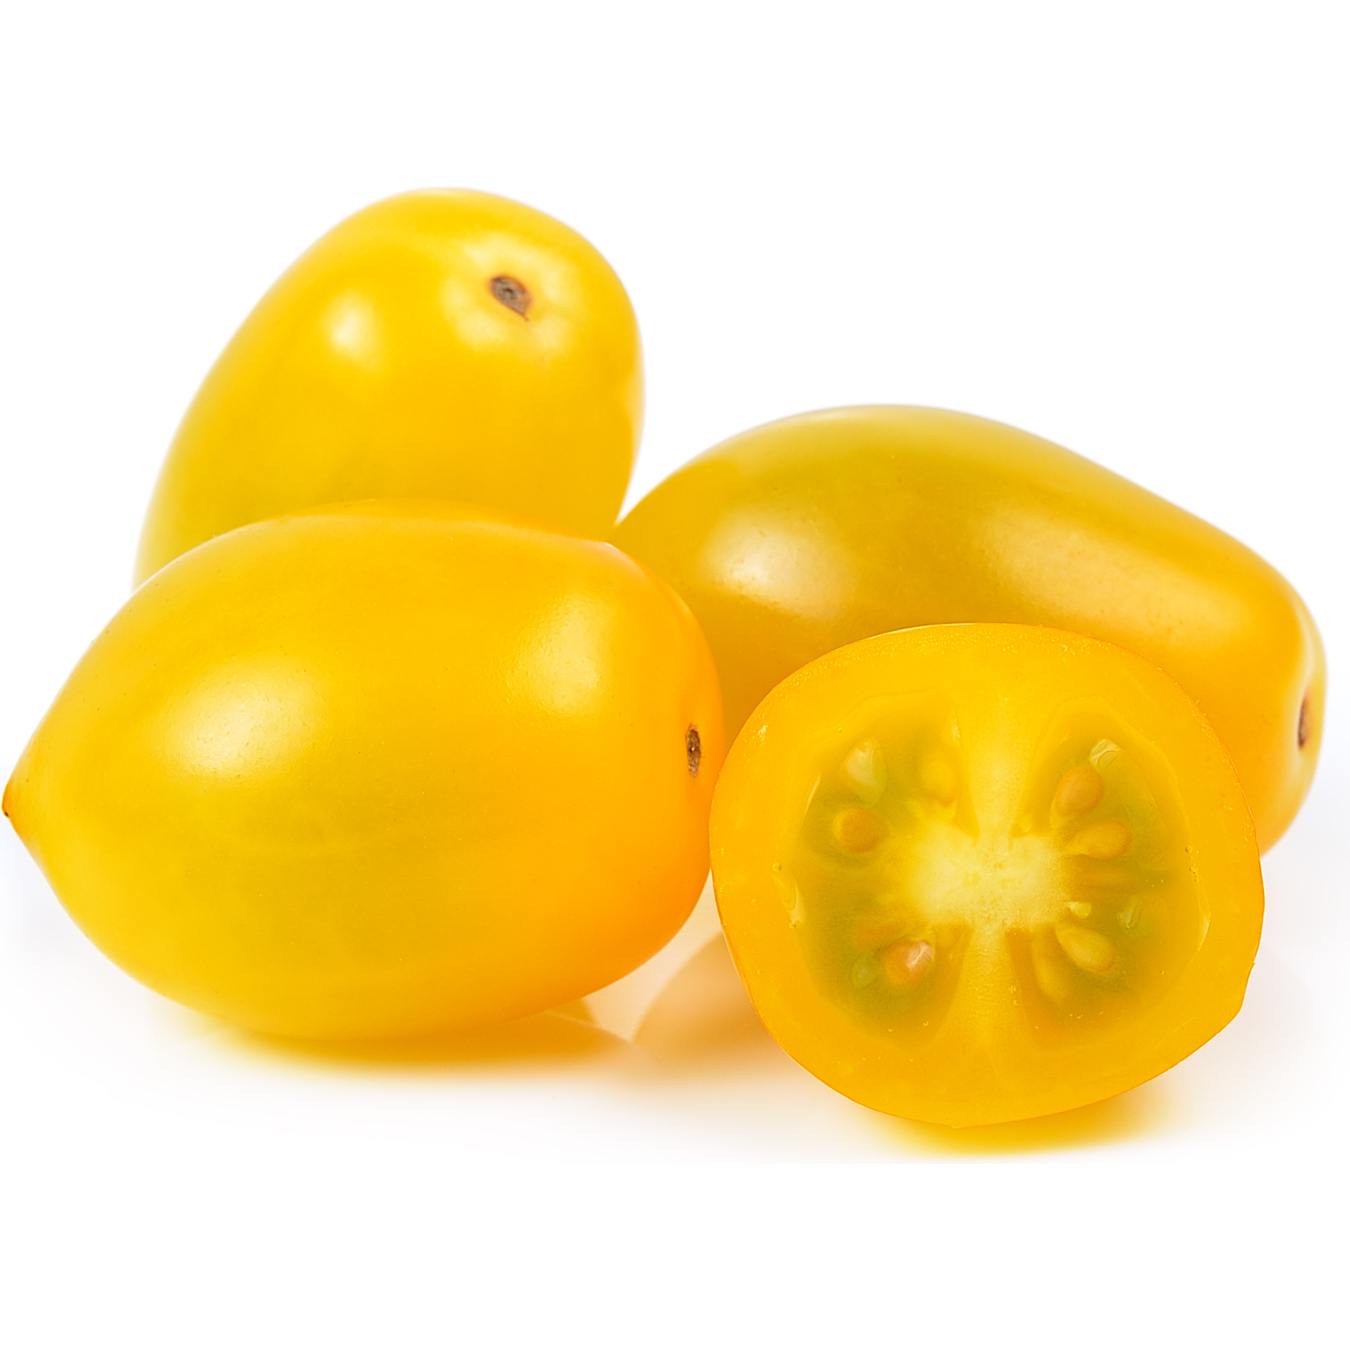 Yellow plum tomato